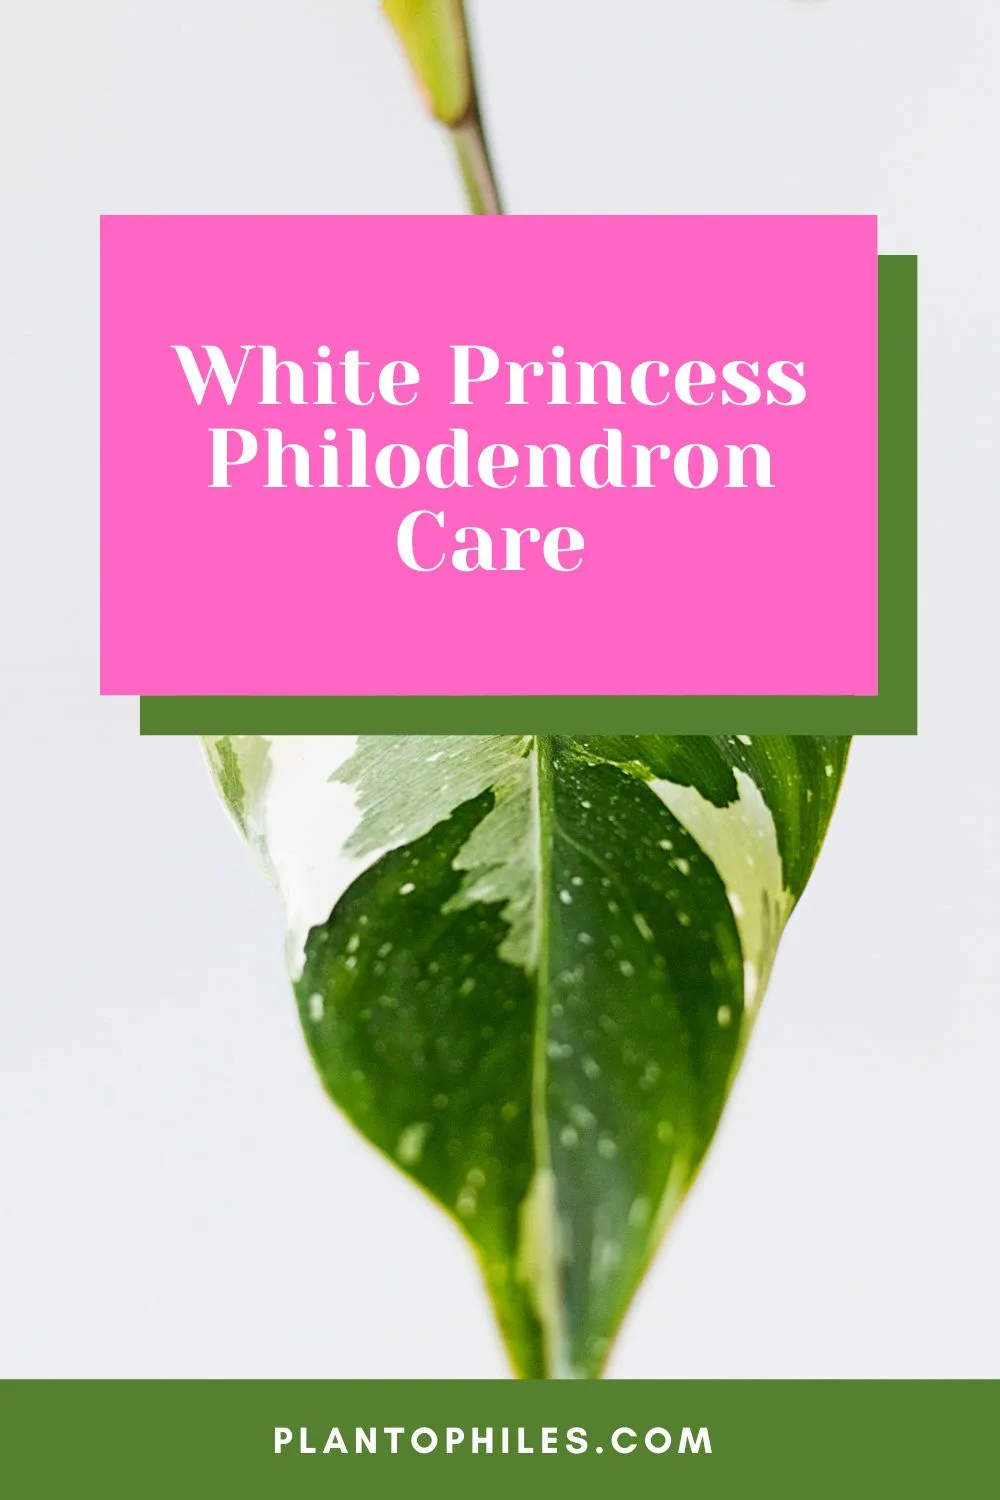 White Princess Philodendron Care